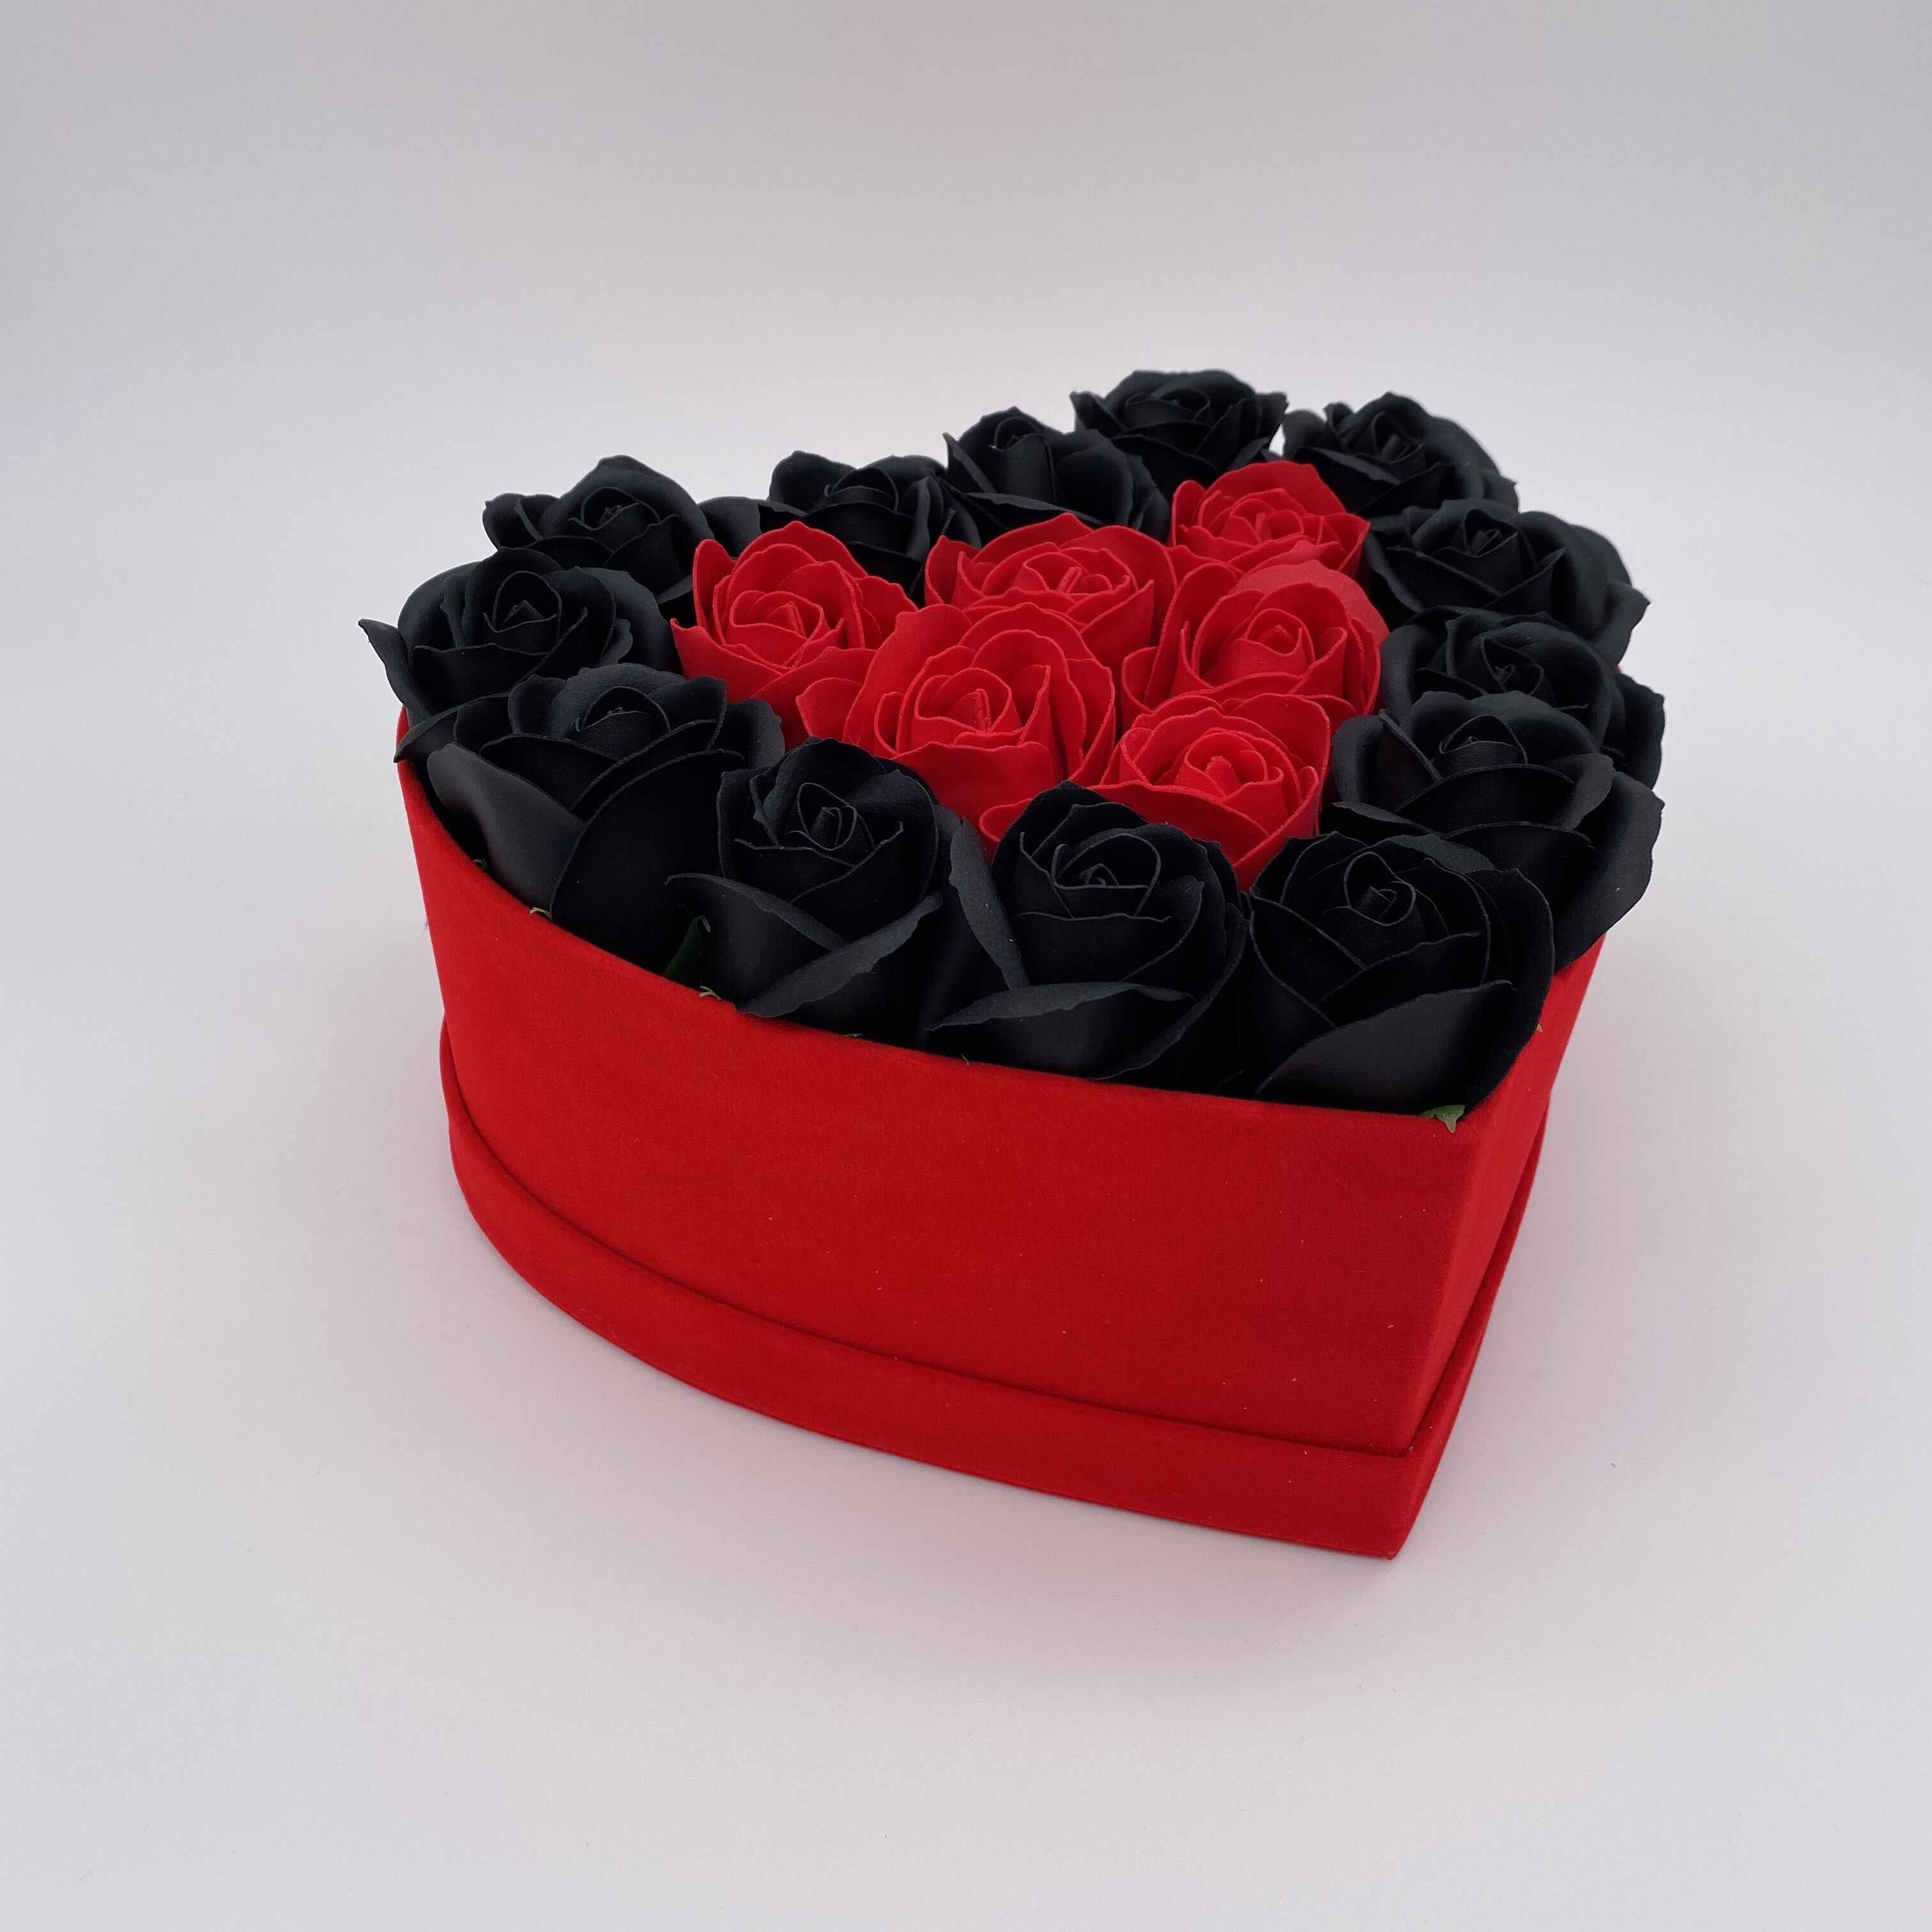 Aranjament Floral in forma de Inima, 19 Trandafiri Rosii/Negri, Cutie Rosie de Catifea, Mic